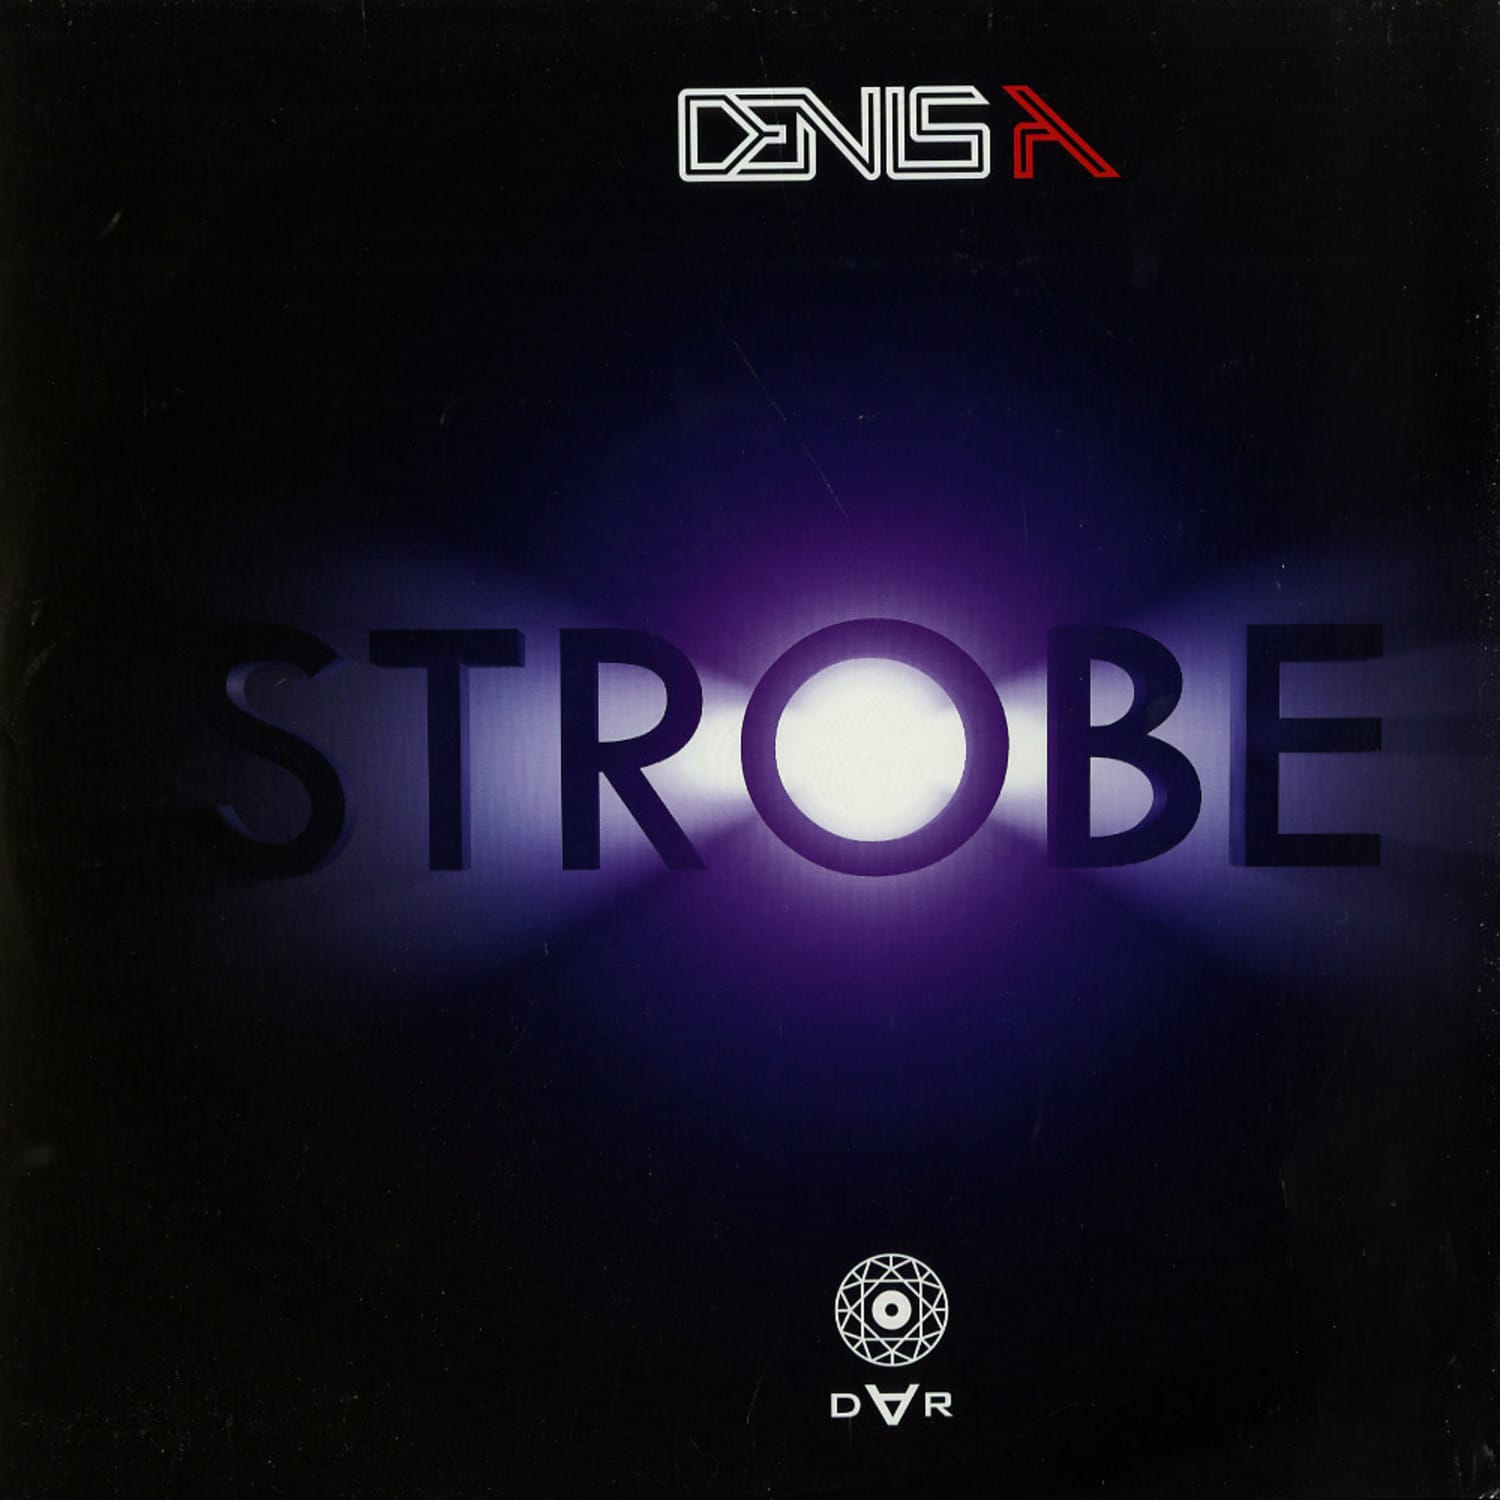 Denis A - STROBE EP